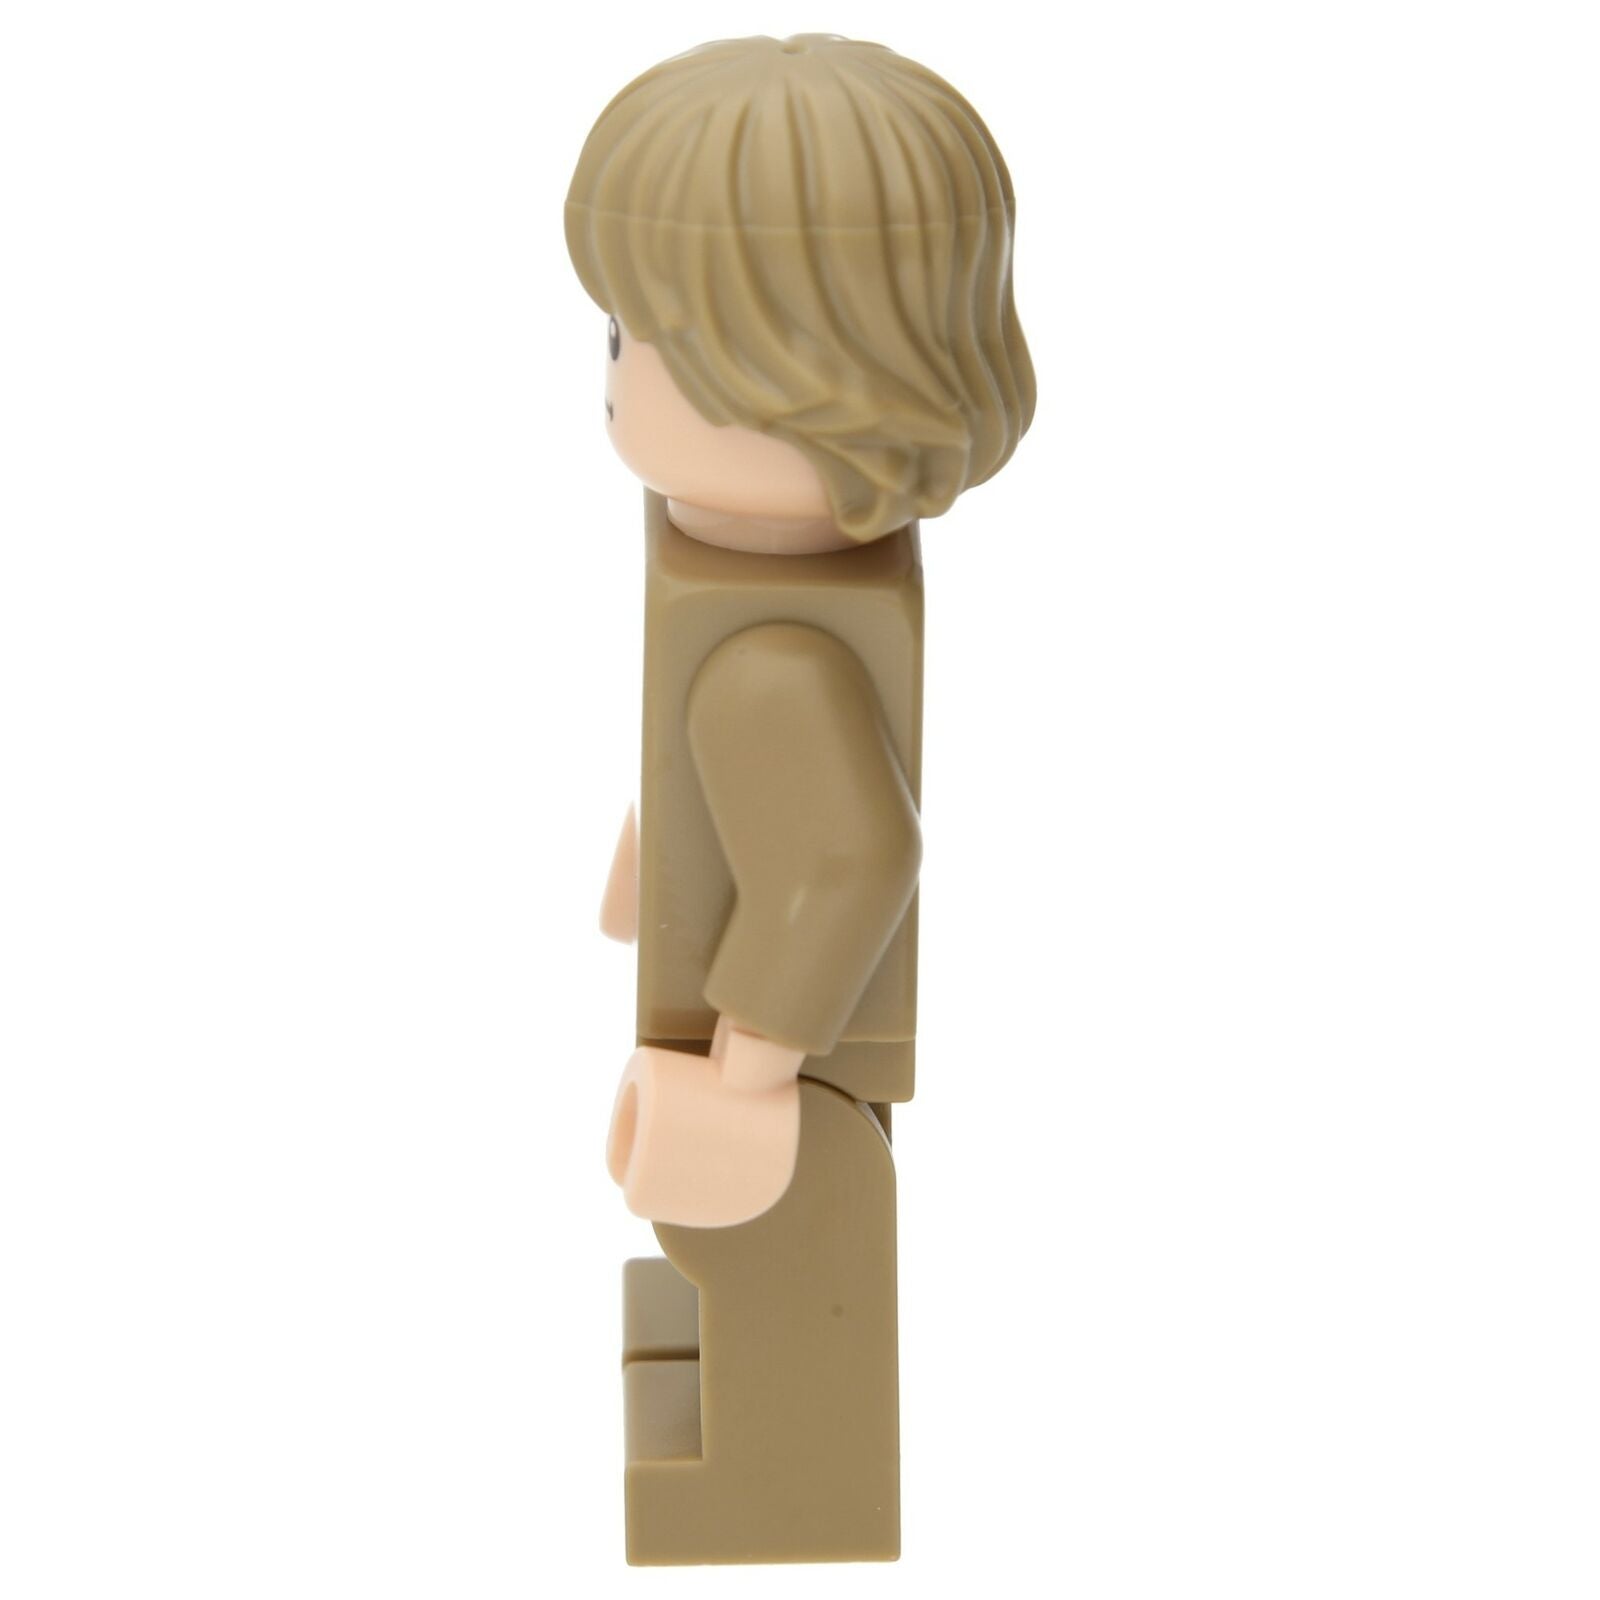 LEGO Star Wars Minifigure - Luke Skywalker (Dark Tan Shirt)